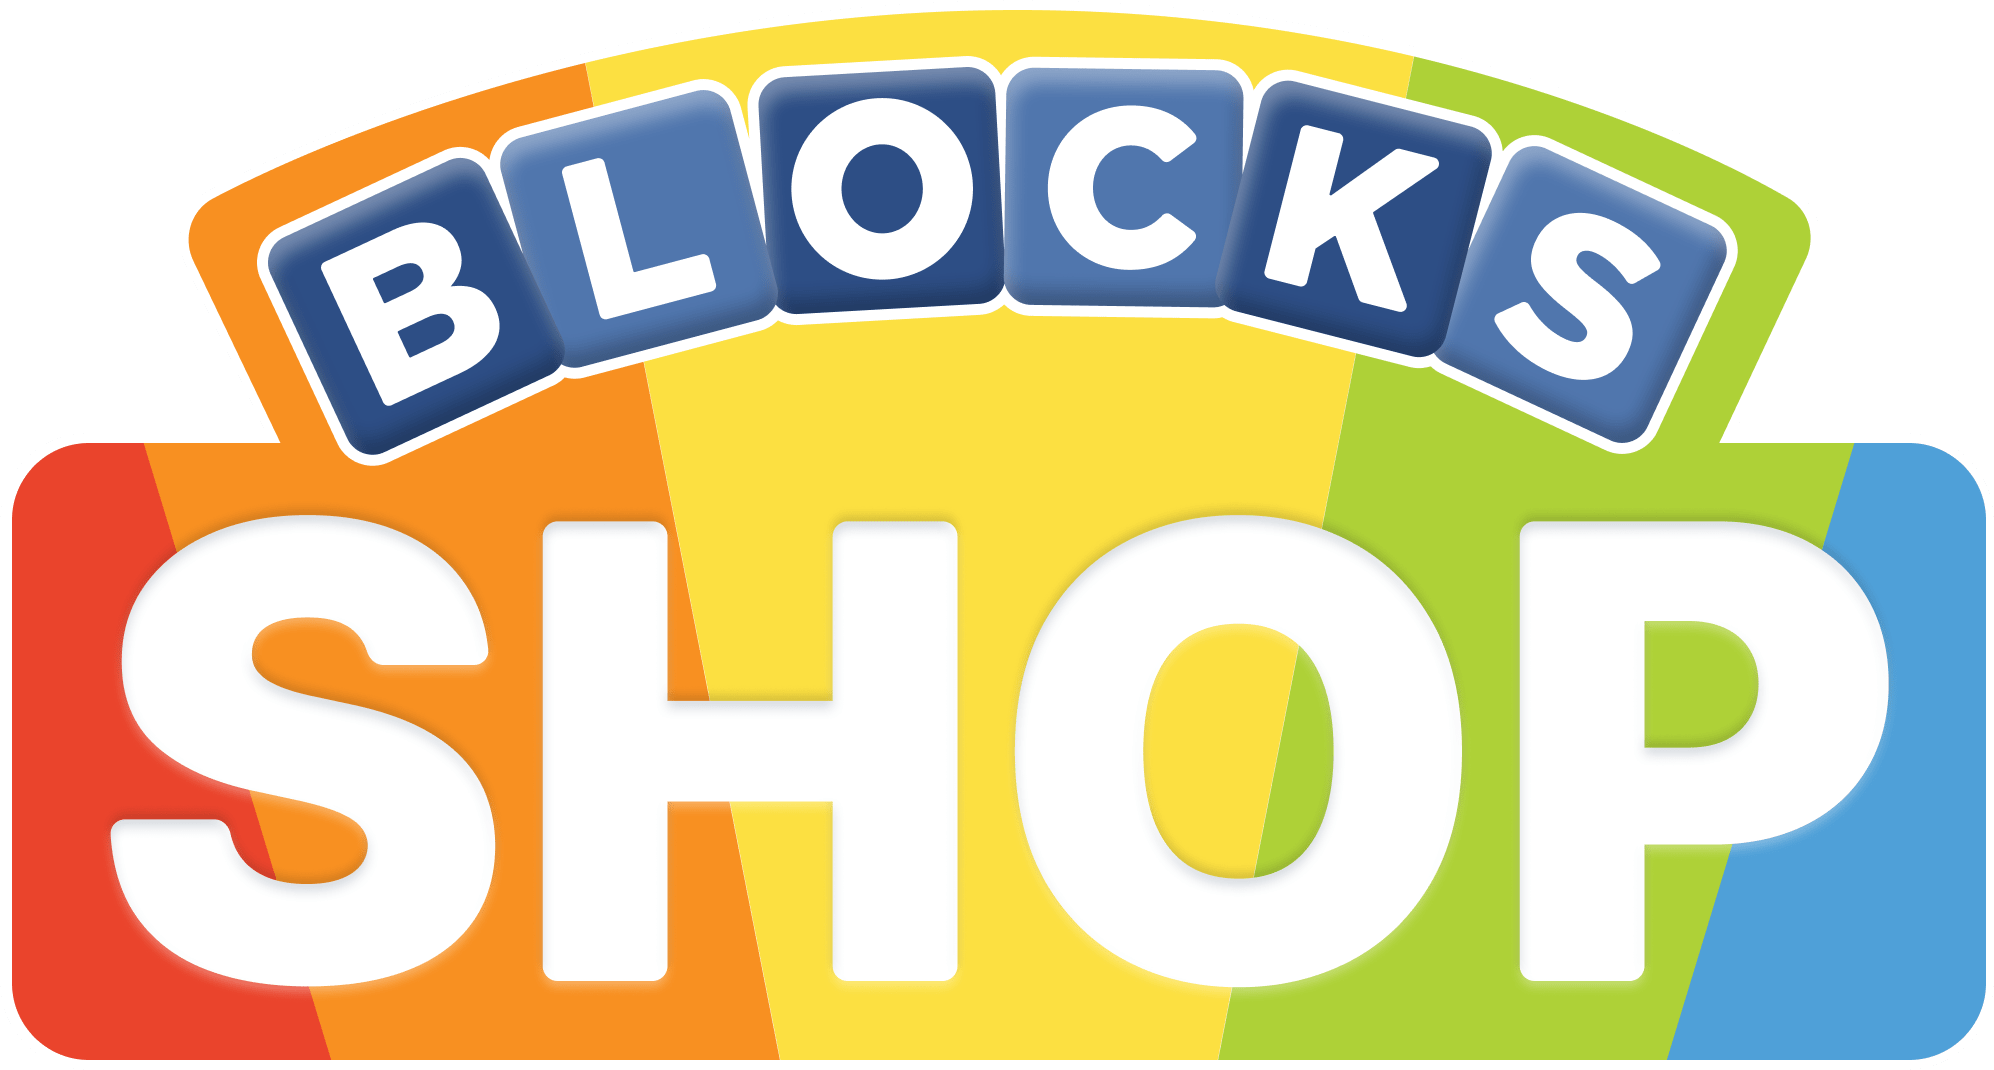 Blocks Shop